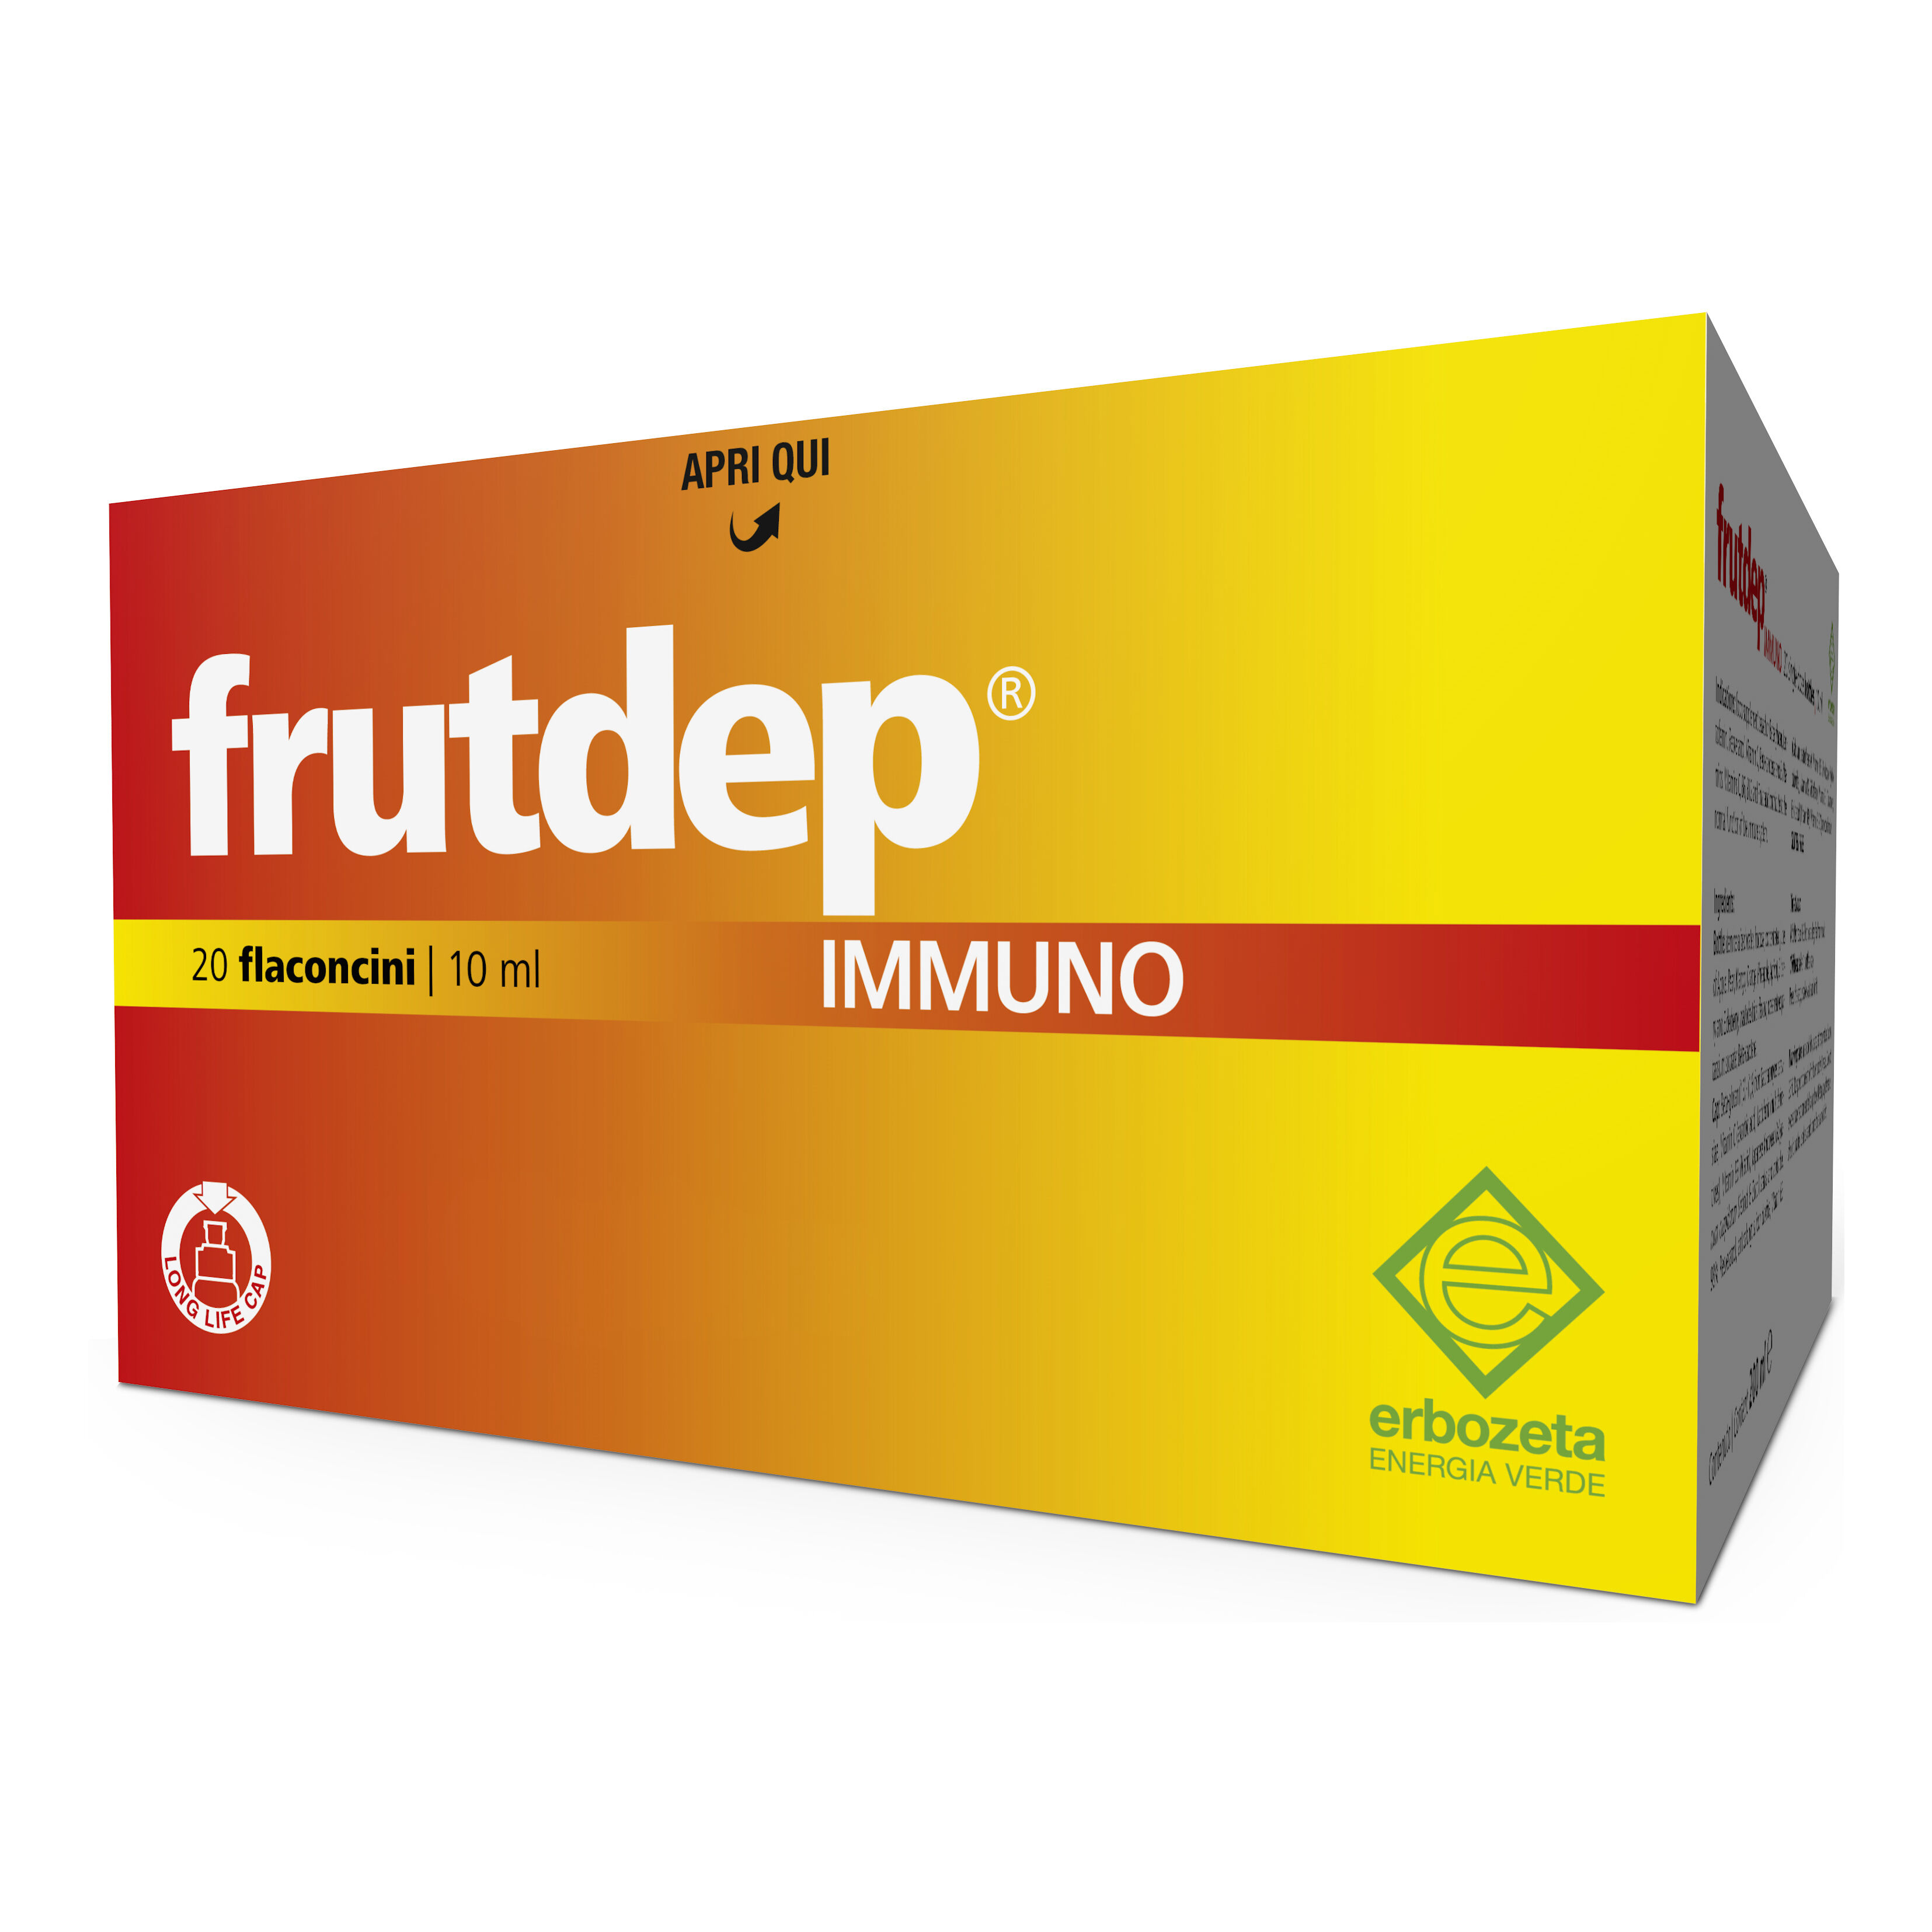 Erbozeta Spa Frutdep Immuno 20 Ampolle 10ml